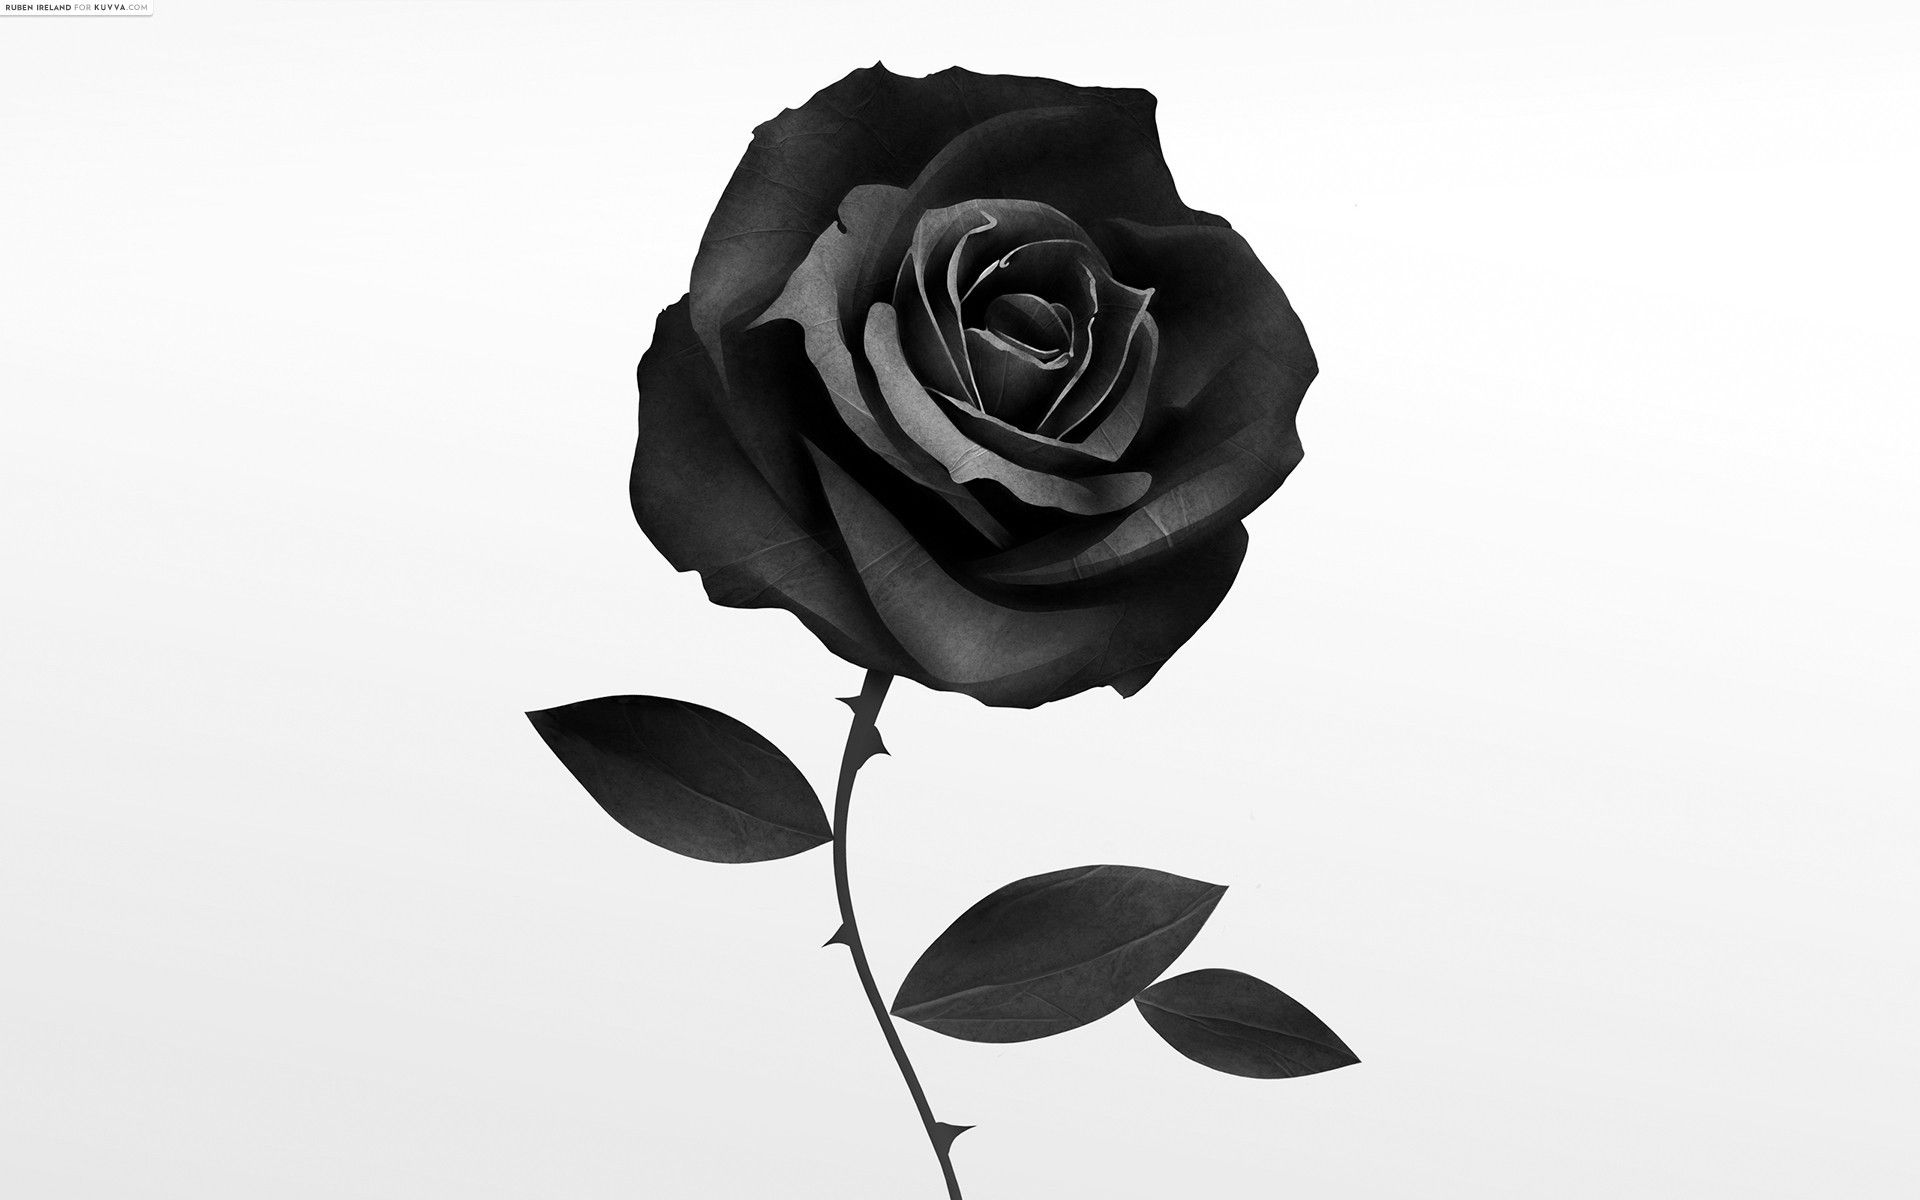 Fondos de pantalla de rosas negras - FondosMil